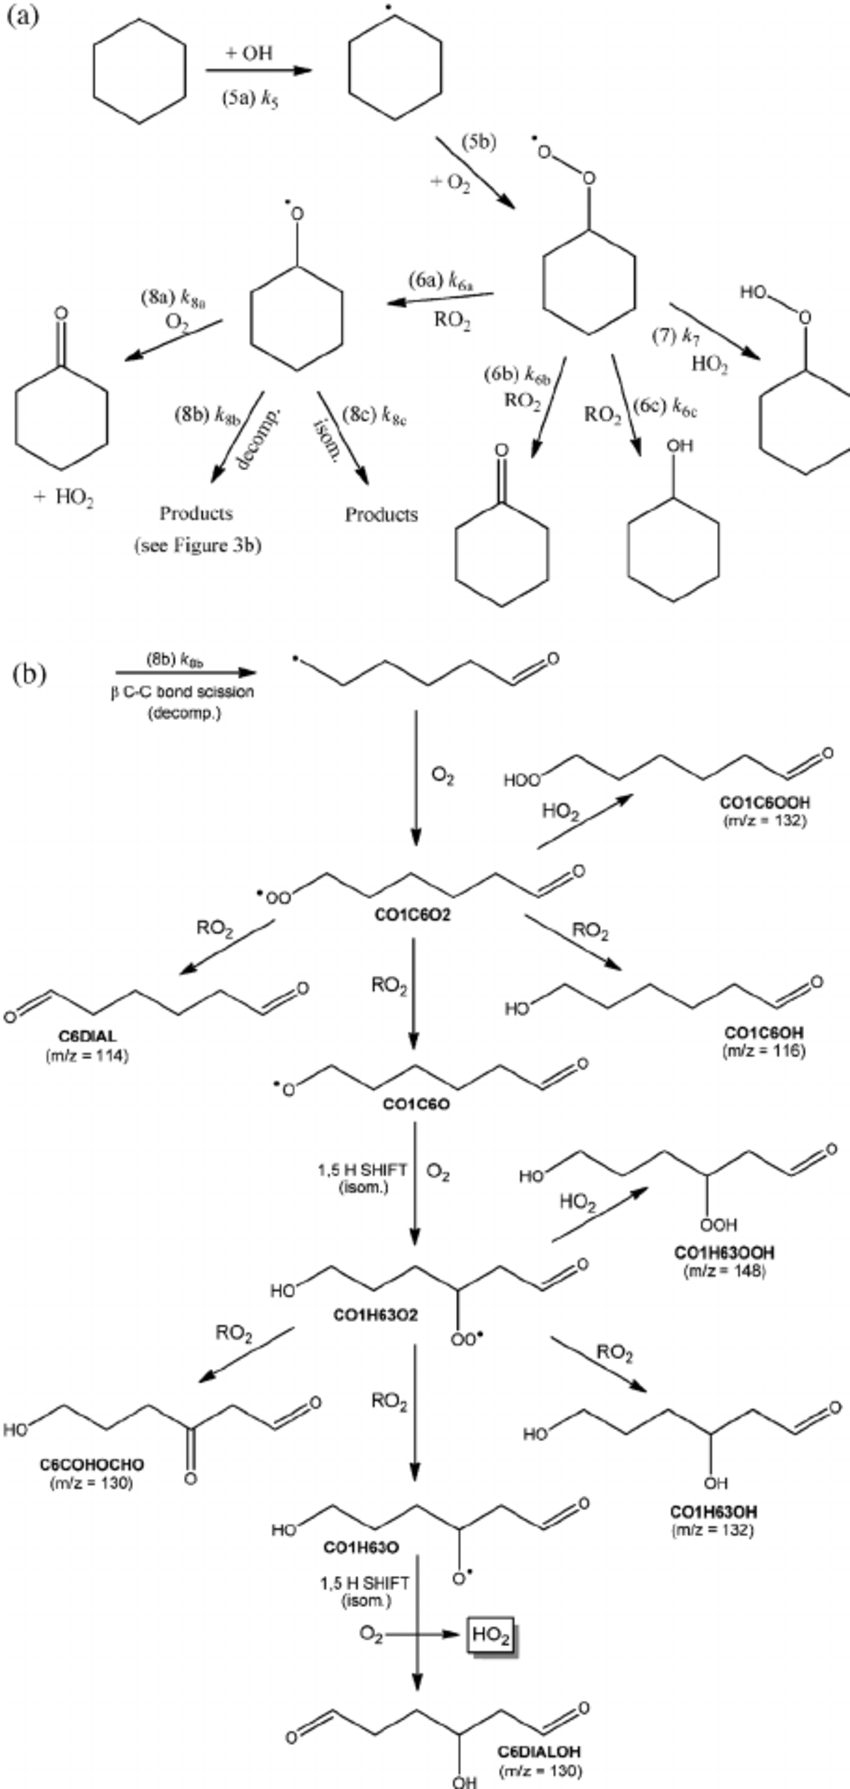 What does cyclohexane do